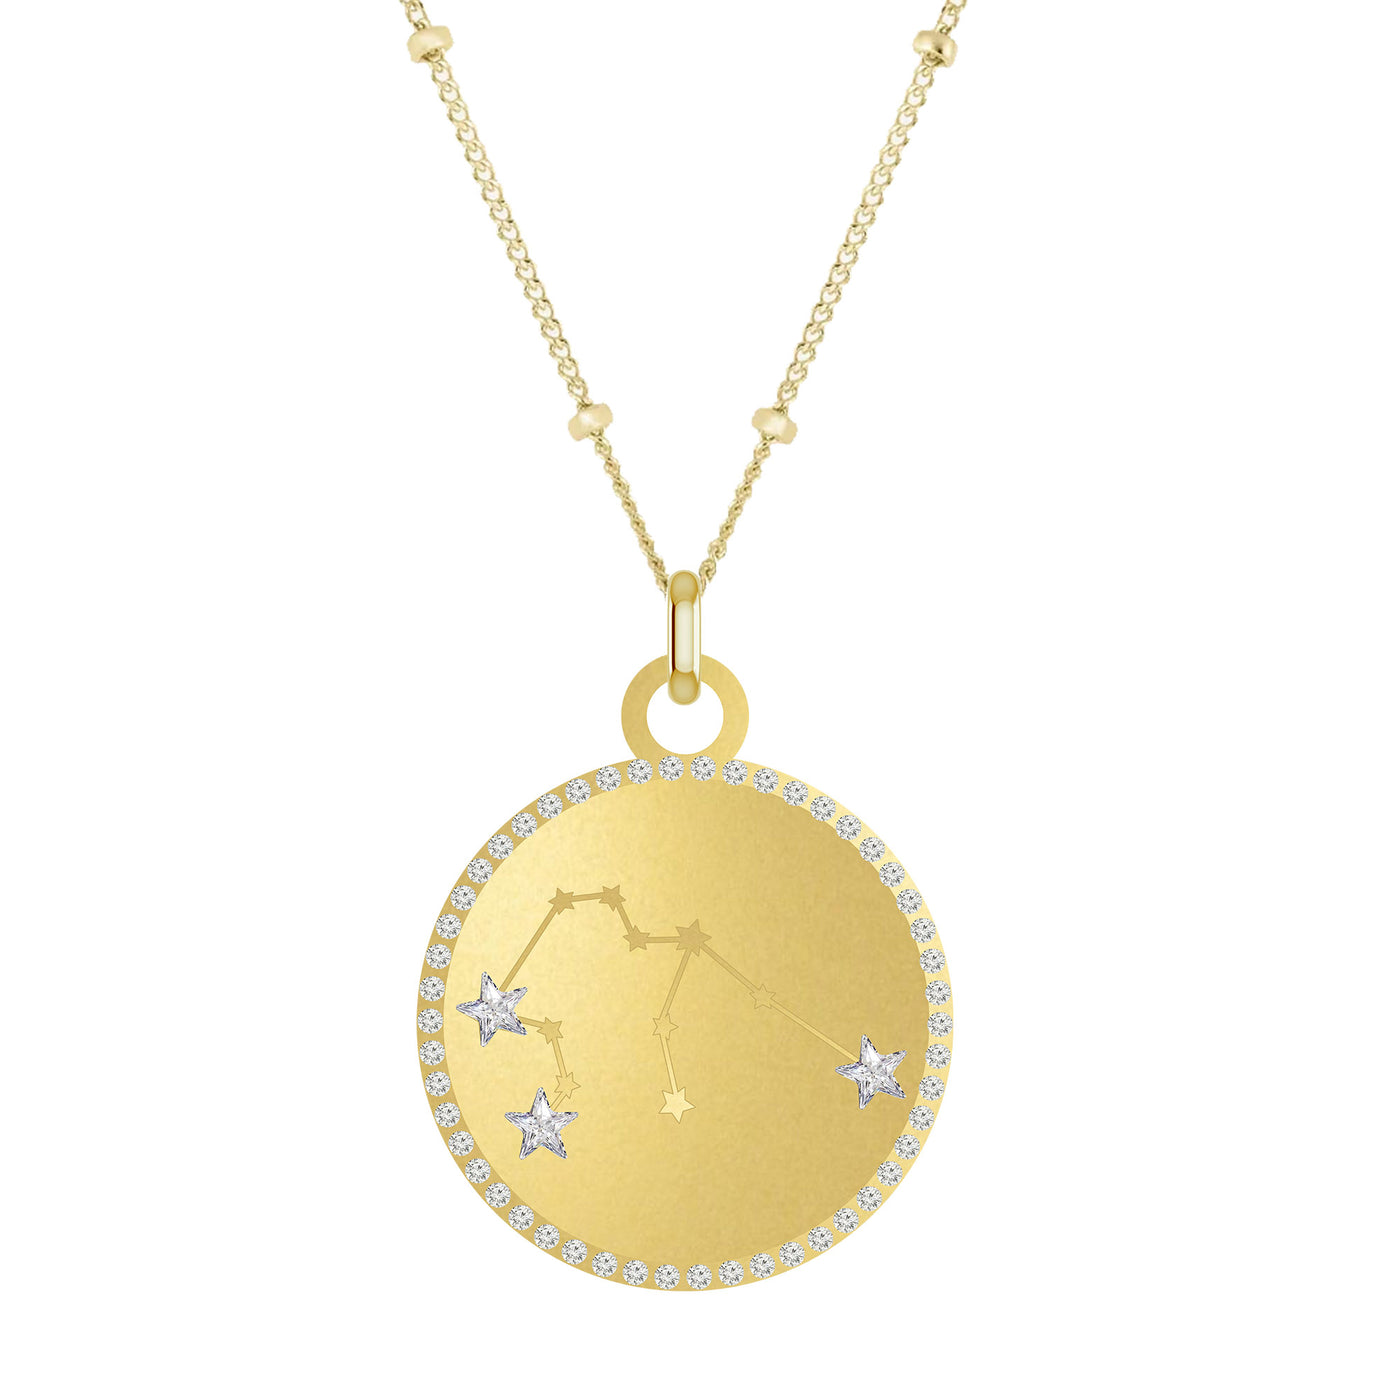 AQUARIUS Round Zodiac Constellation with Stars Necklace